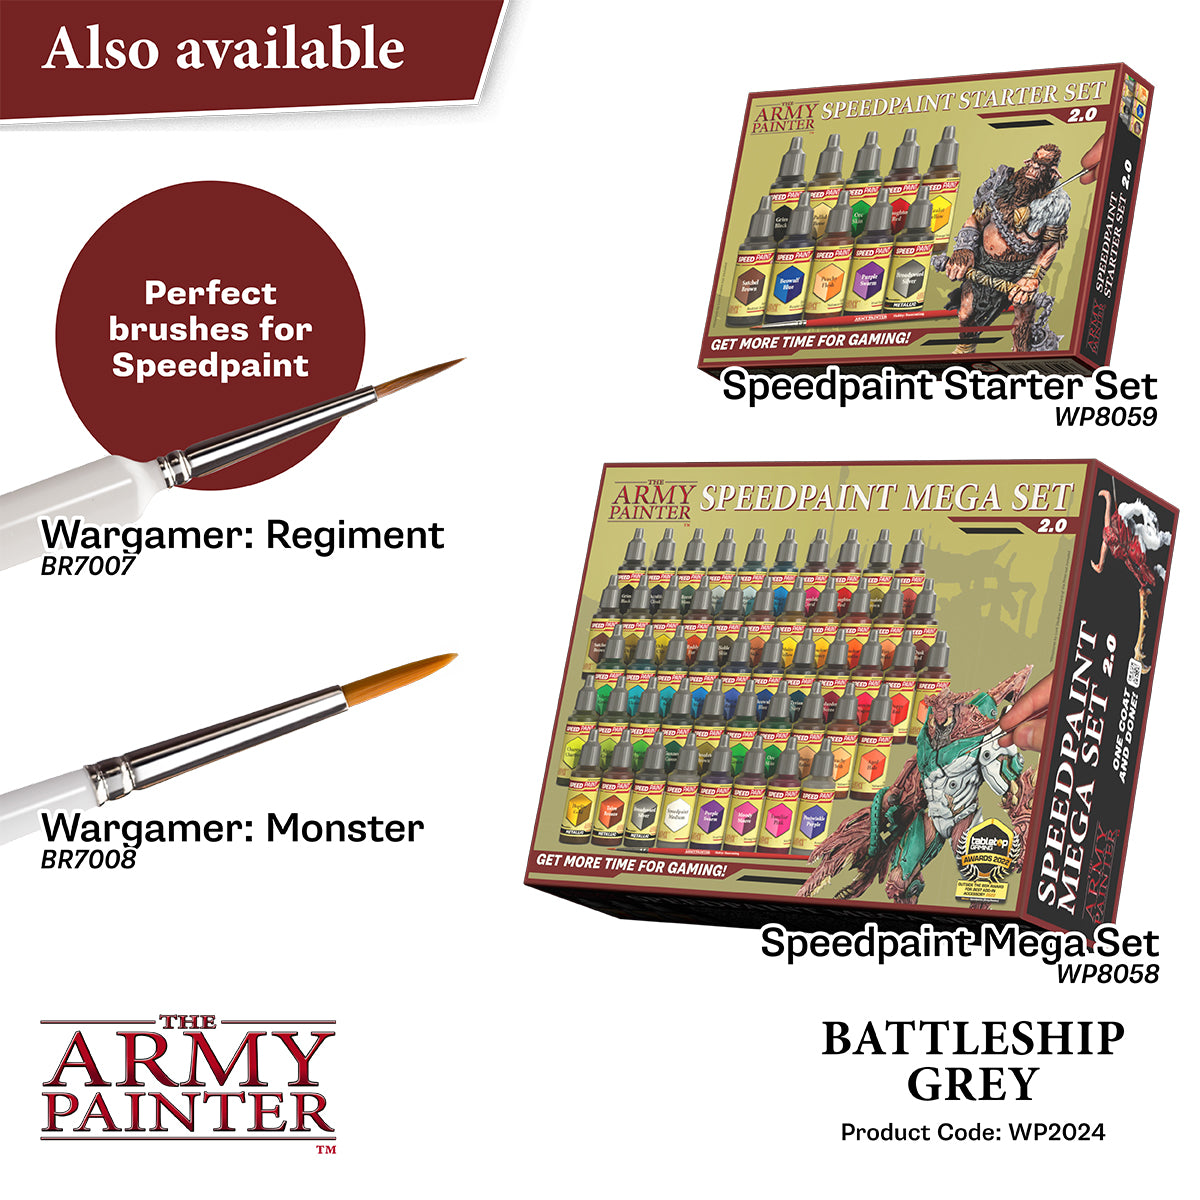 The Army Painter - Speedpaint Mega Set 2.0 – Not Just Gamin